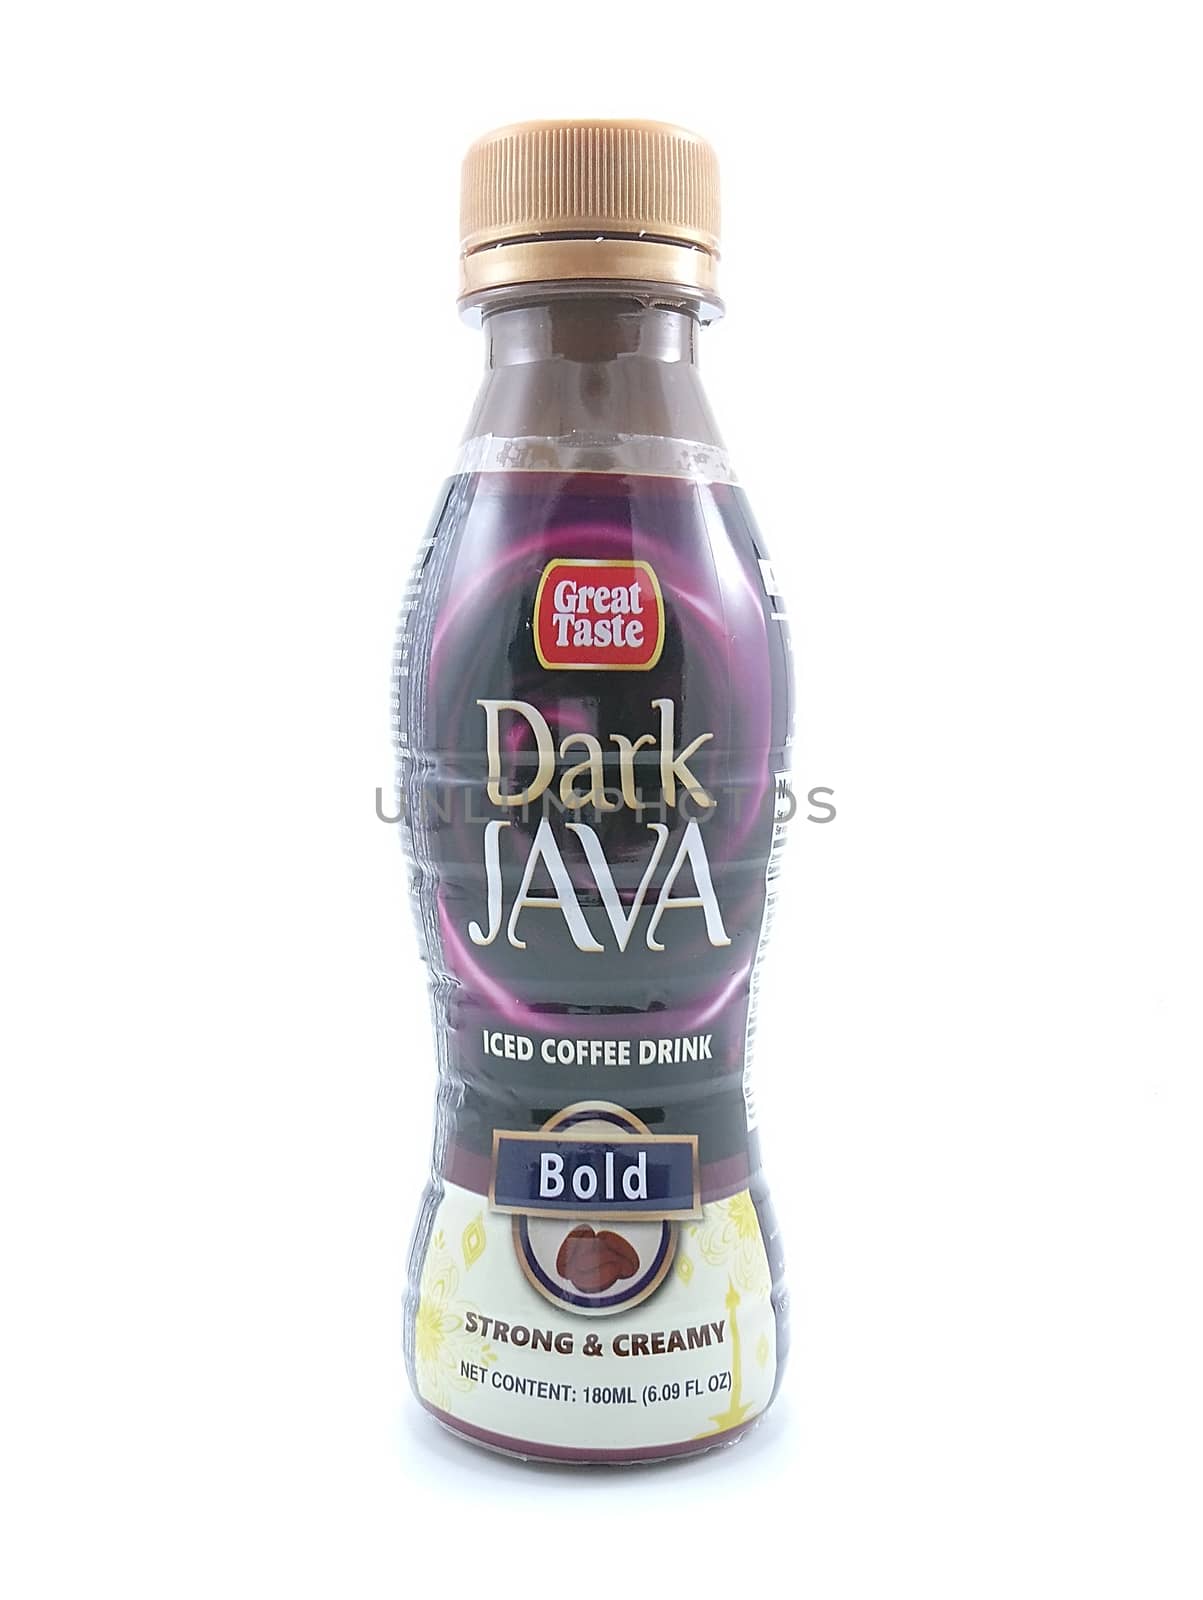 Great taste dark java iced coffee drink in Manila, Philippines by imwaltersy